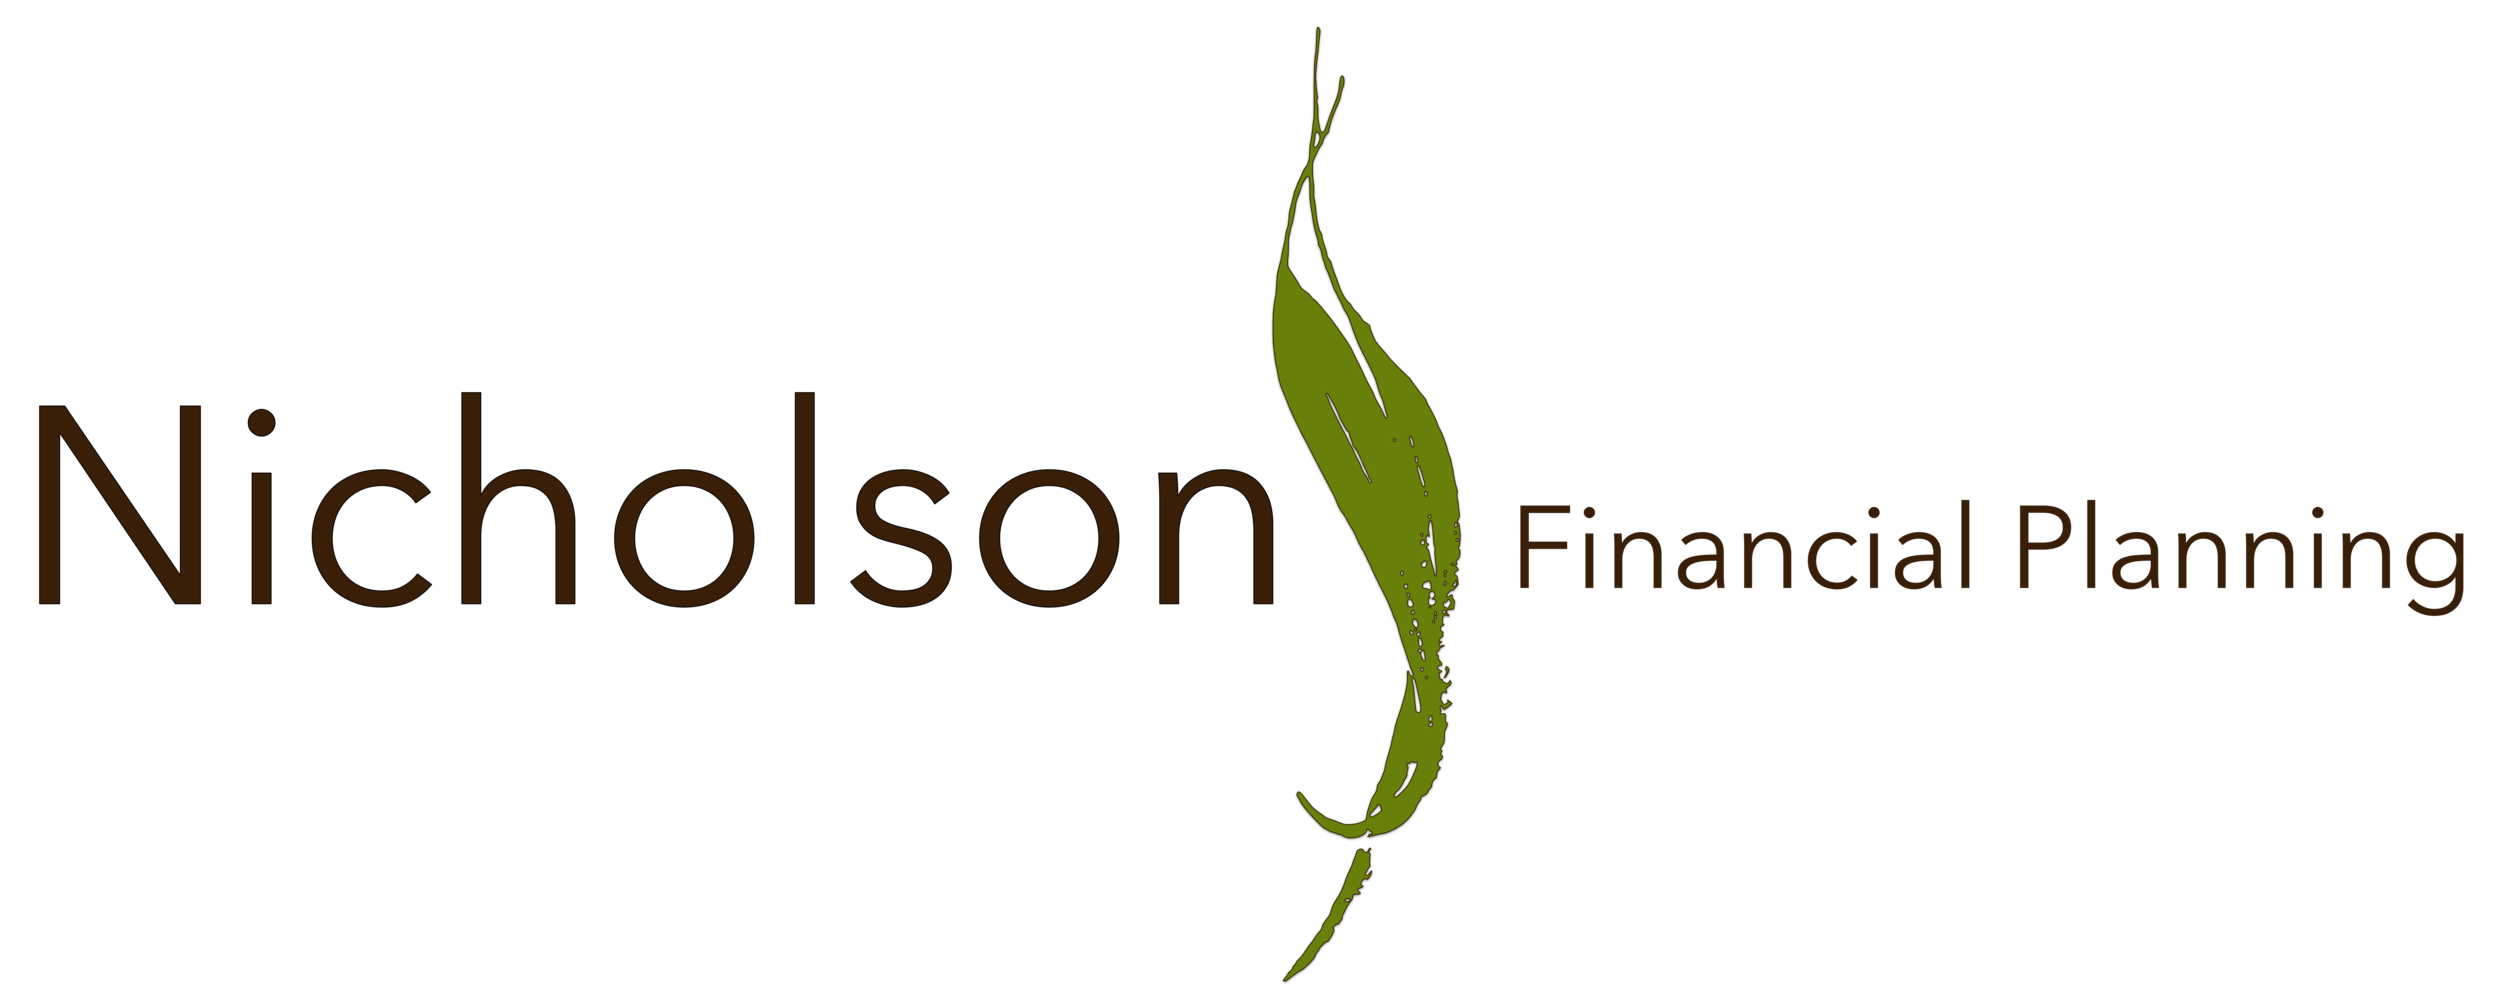 Nicholson Financial Planning